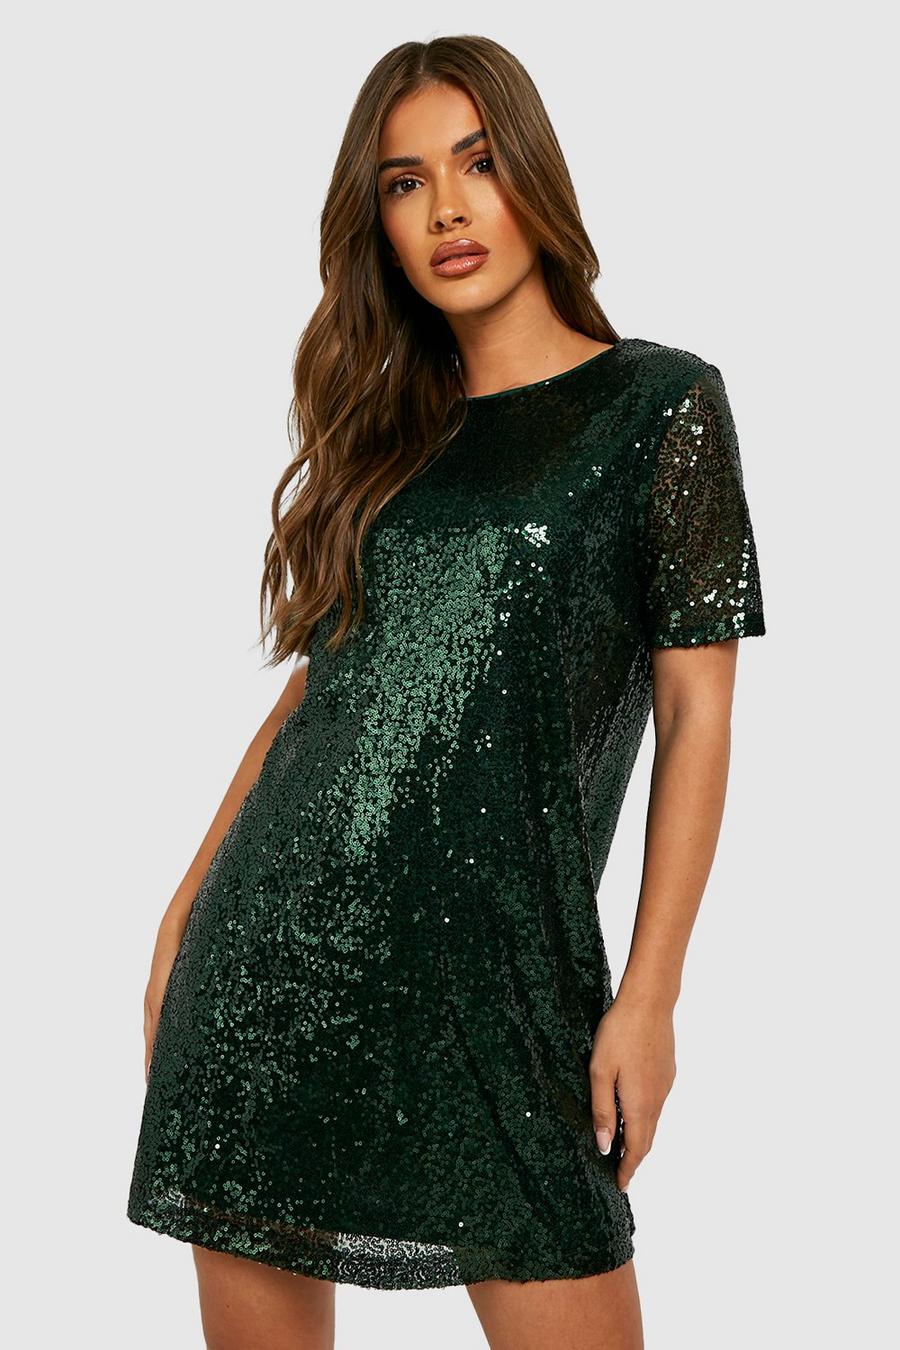 Emerald green Boutique Sequin T-Shirt Party Dress